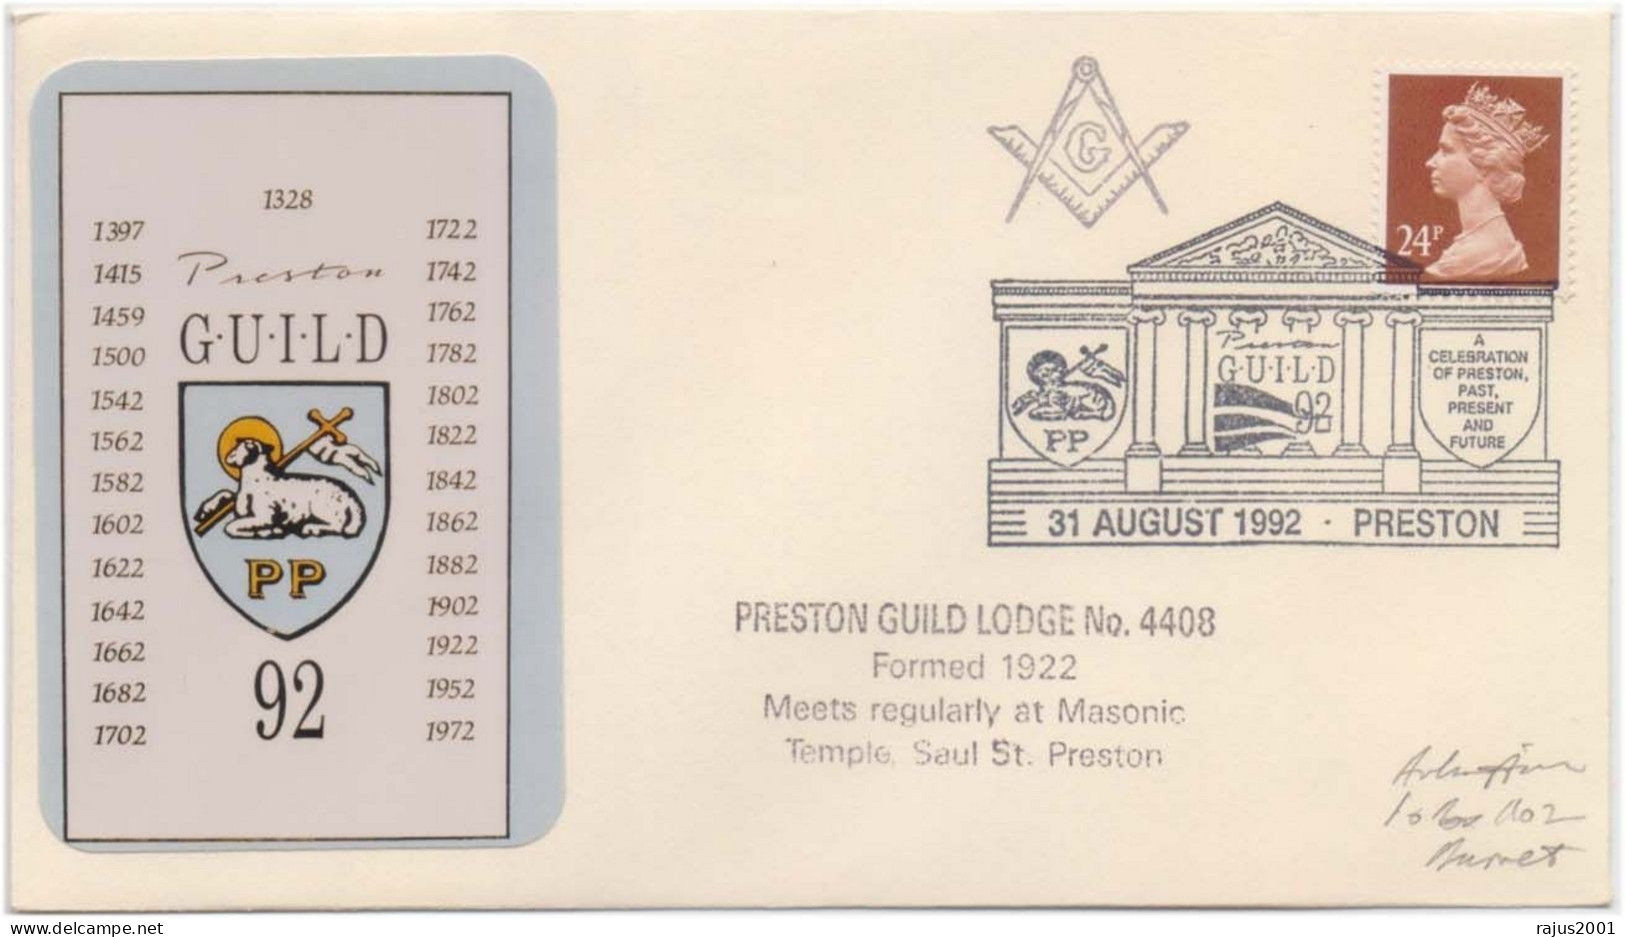 Masonic Temple Saul St. Preston Guild Lodge No 4408, Freemasonry, Masonic, Limited Only 90 Cover Made With Signed - Vrijmetselarij